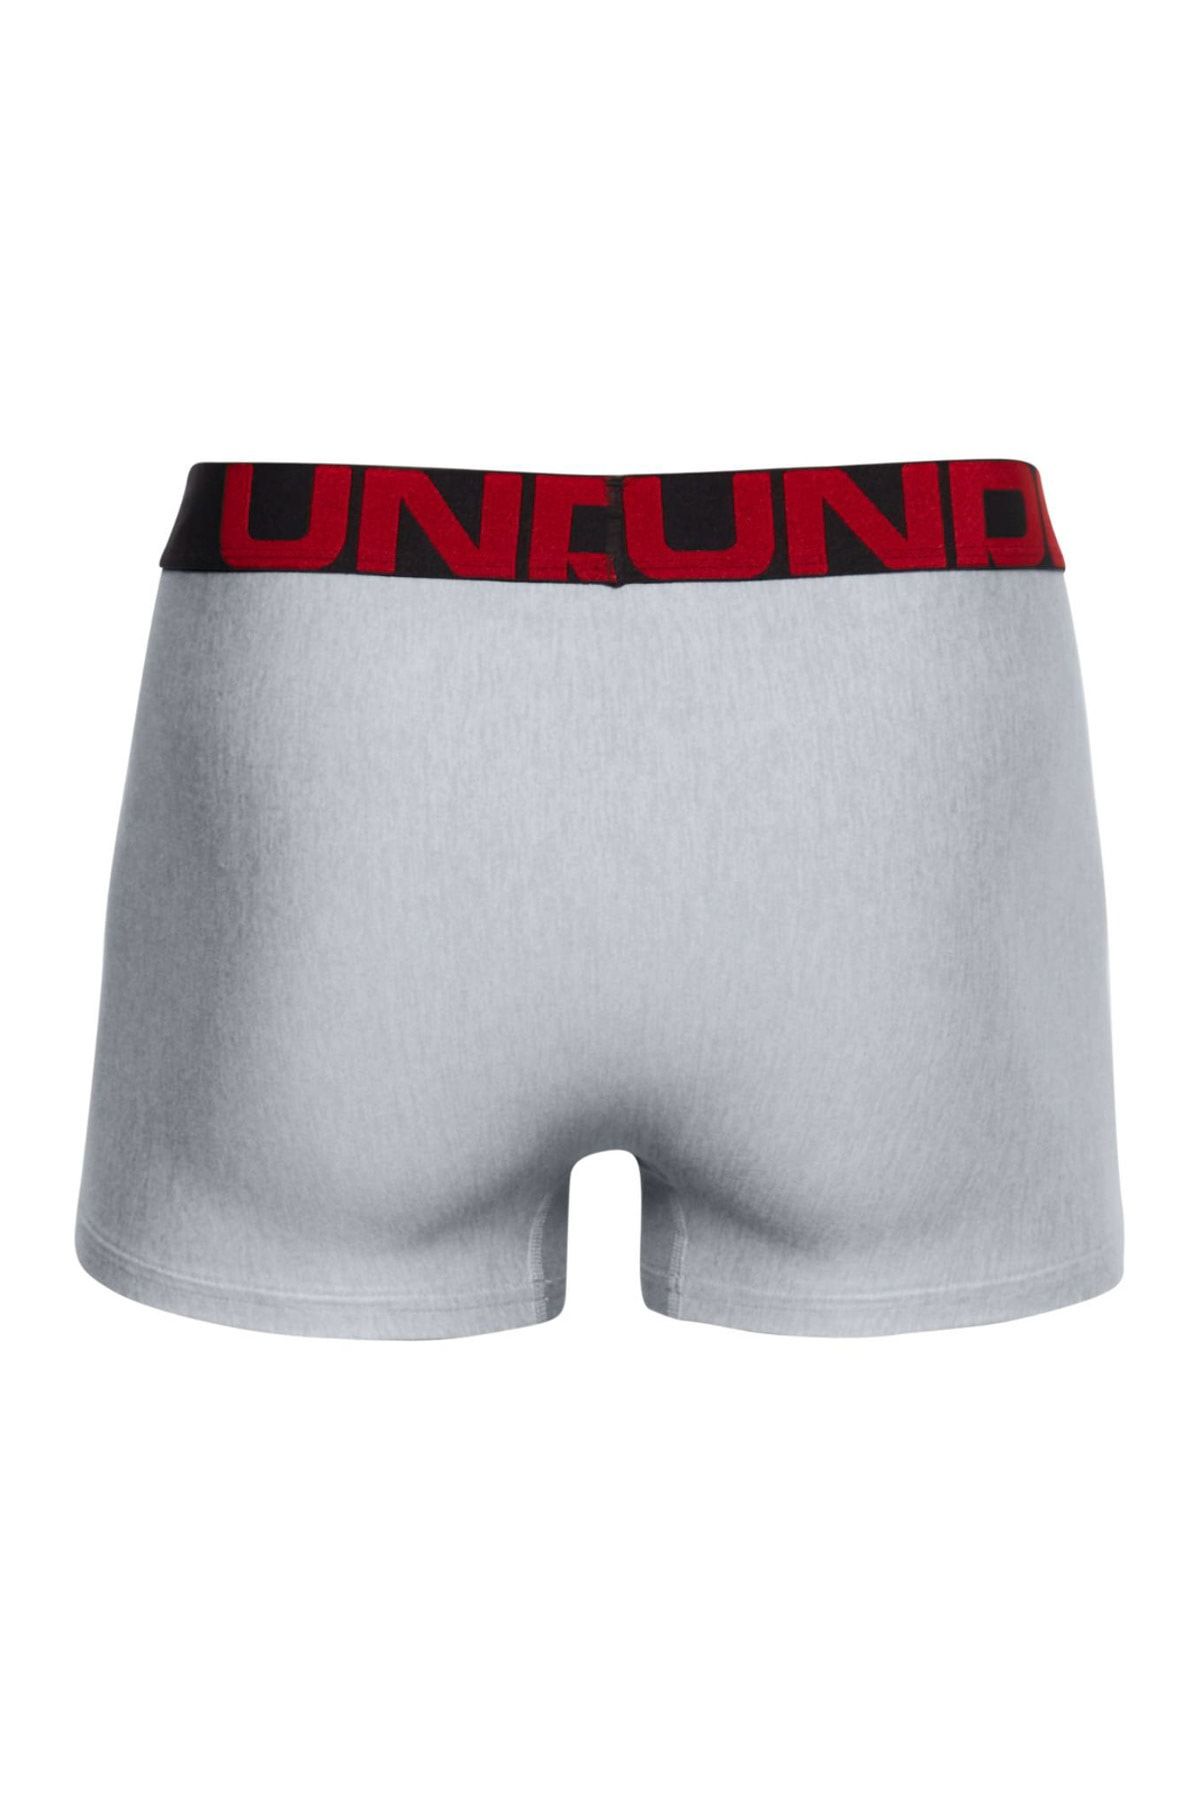 UNDER ARMOUR Mens UA TECH 3 BoxerJock 2-Pack Underwear 1363618